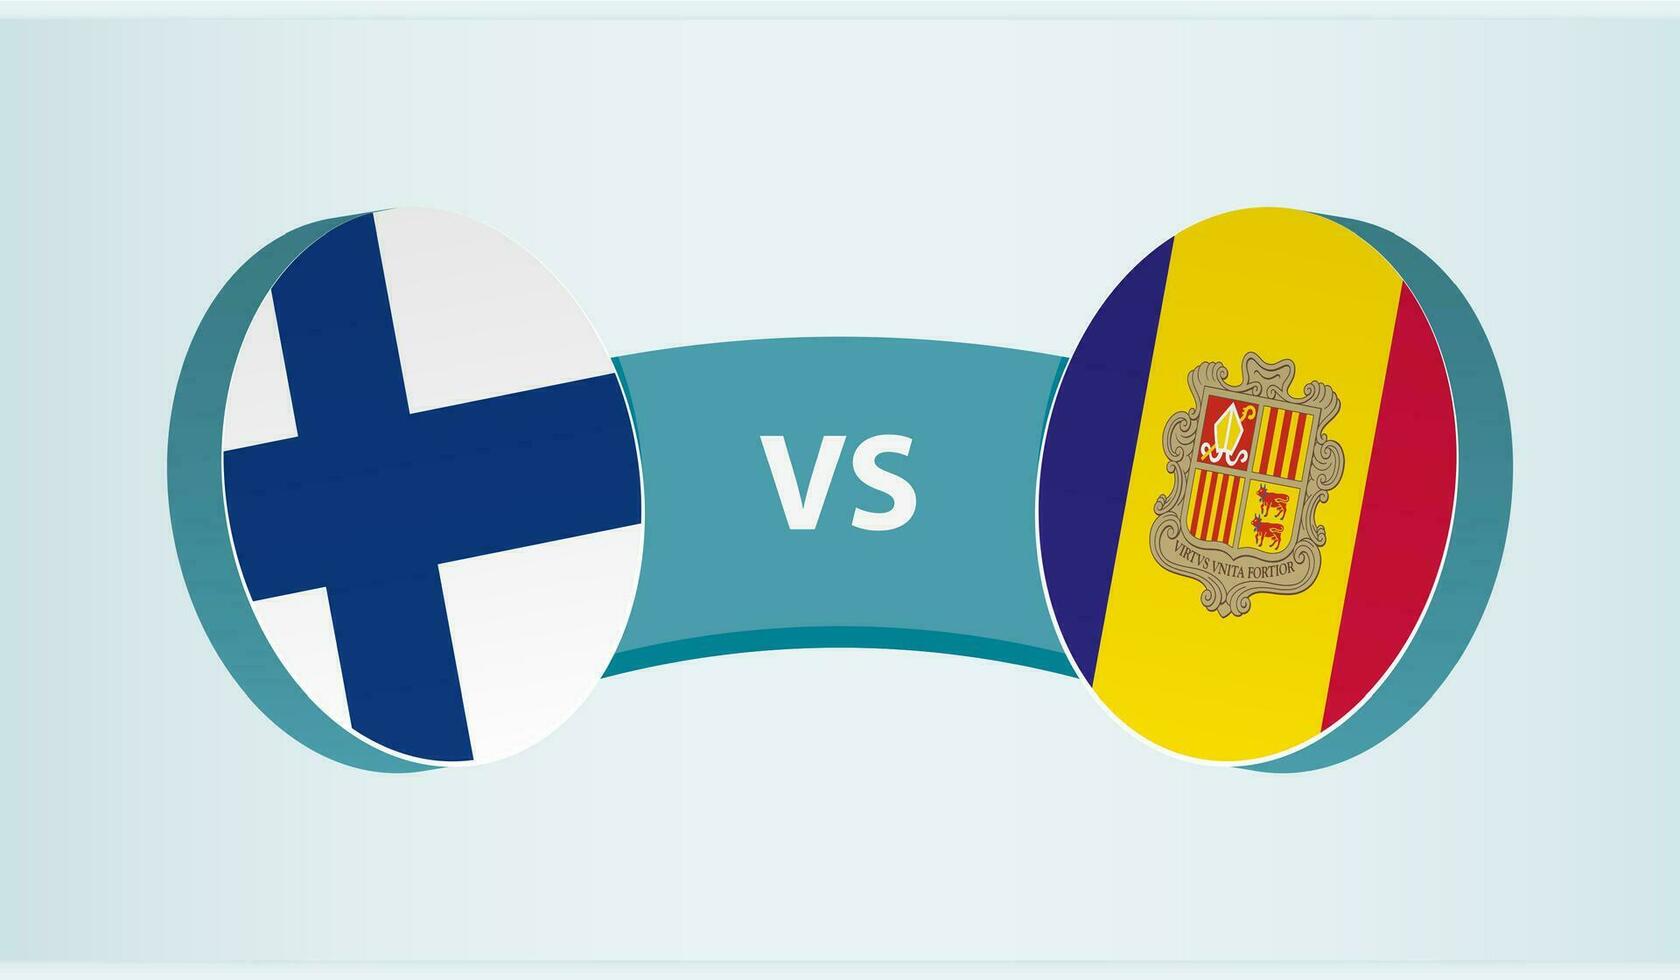 Finland versus Andorra, team sports competition concept. vector